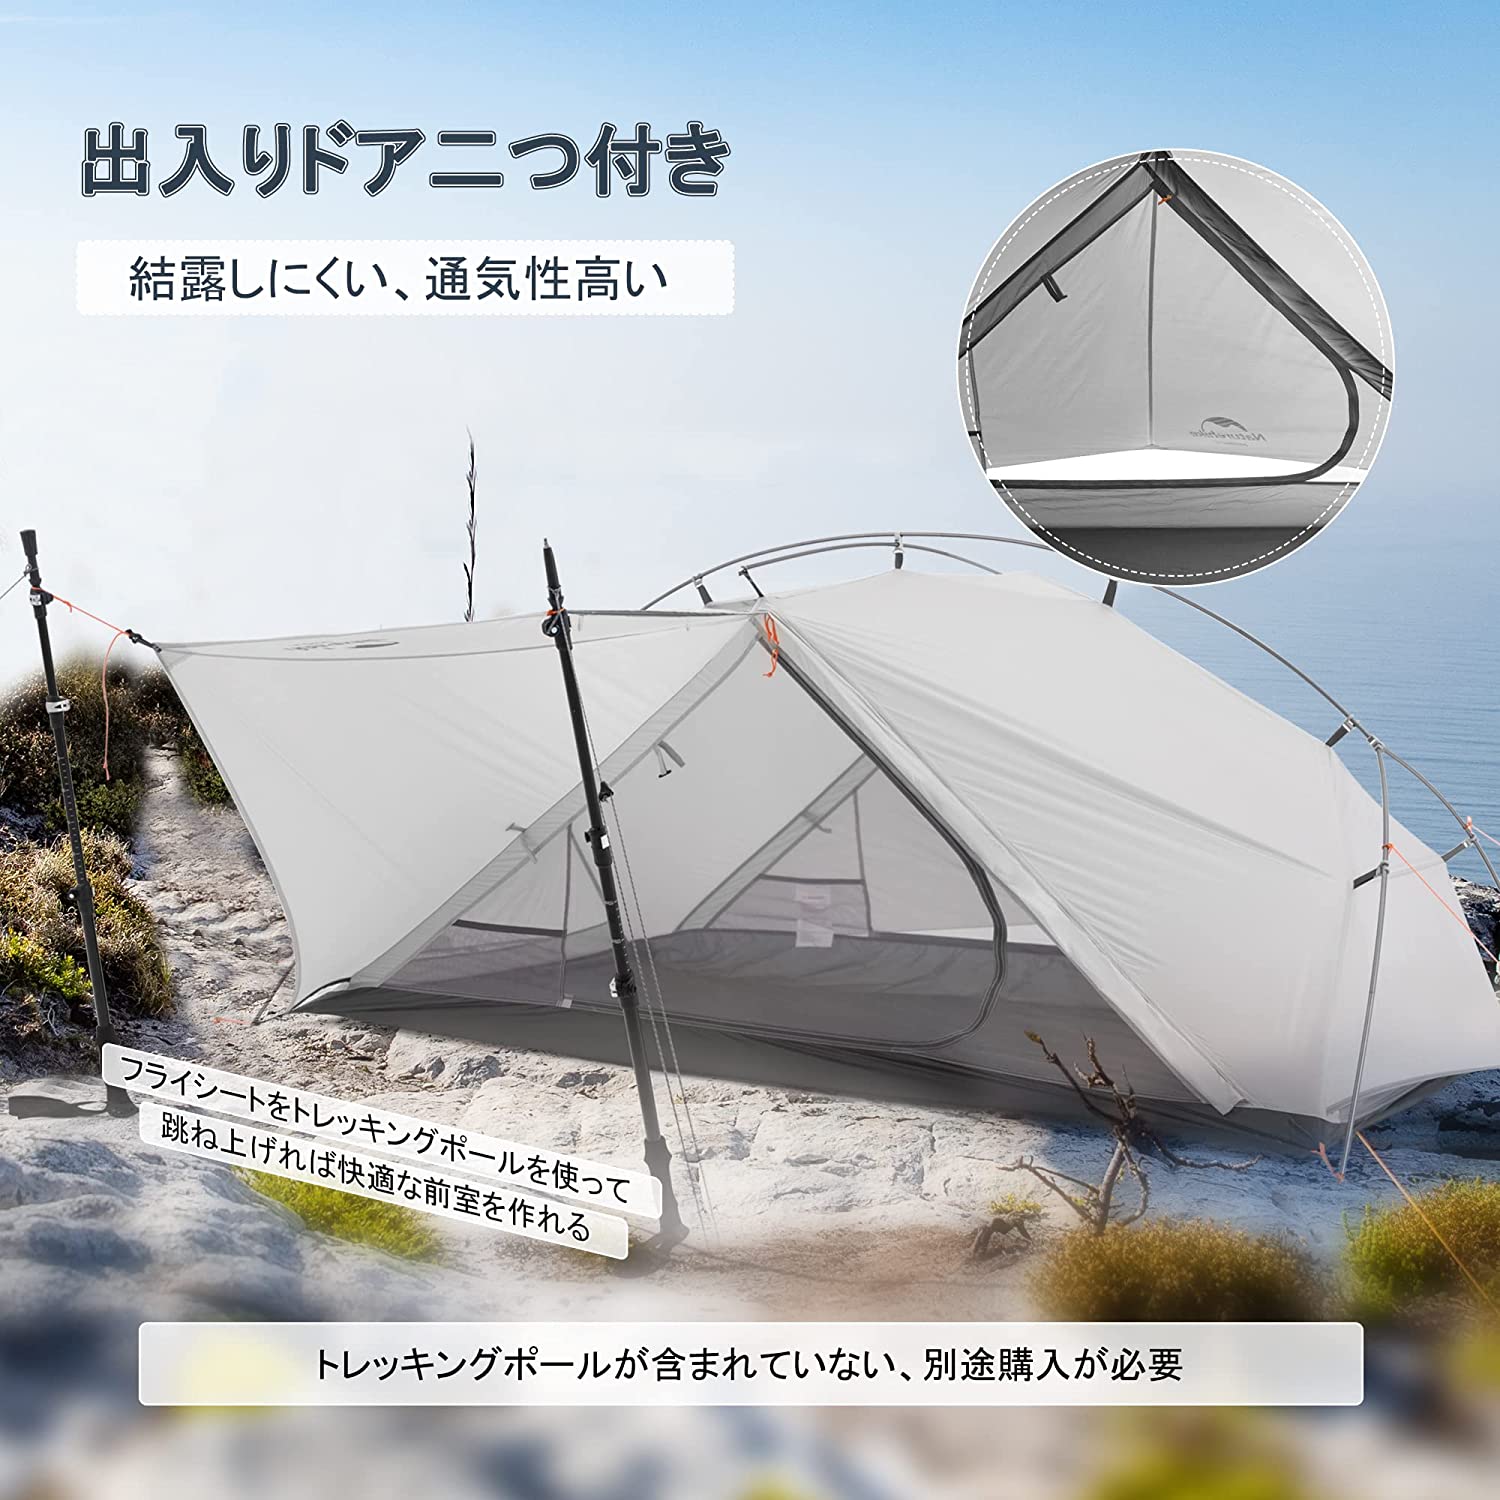 Naturehike vik2 テント 2人用 軽量 ソロキャンプ 登山 自立式 前室 